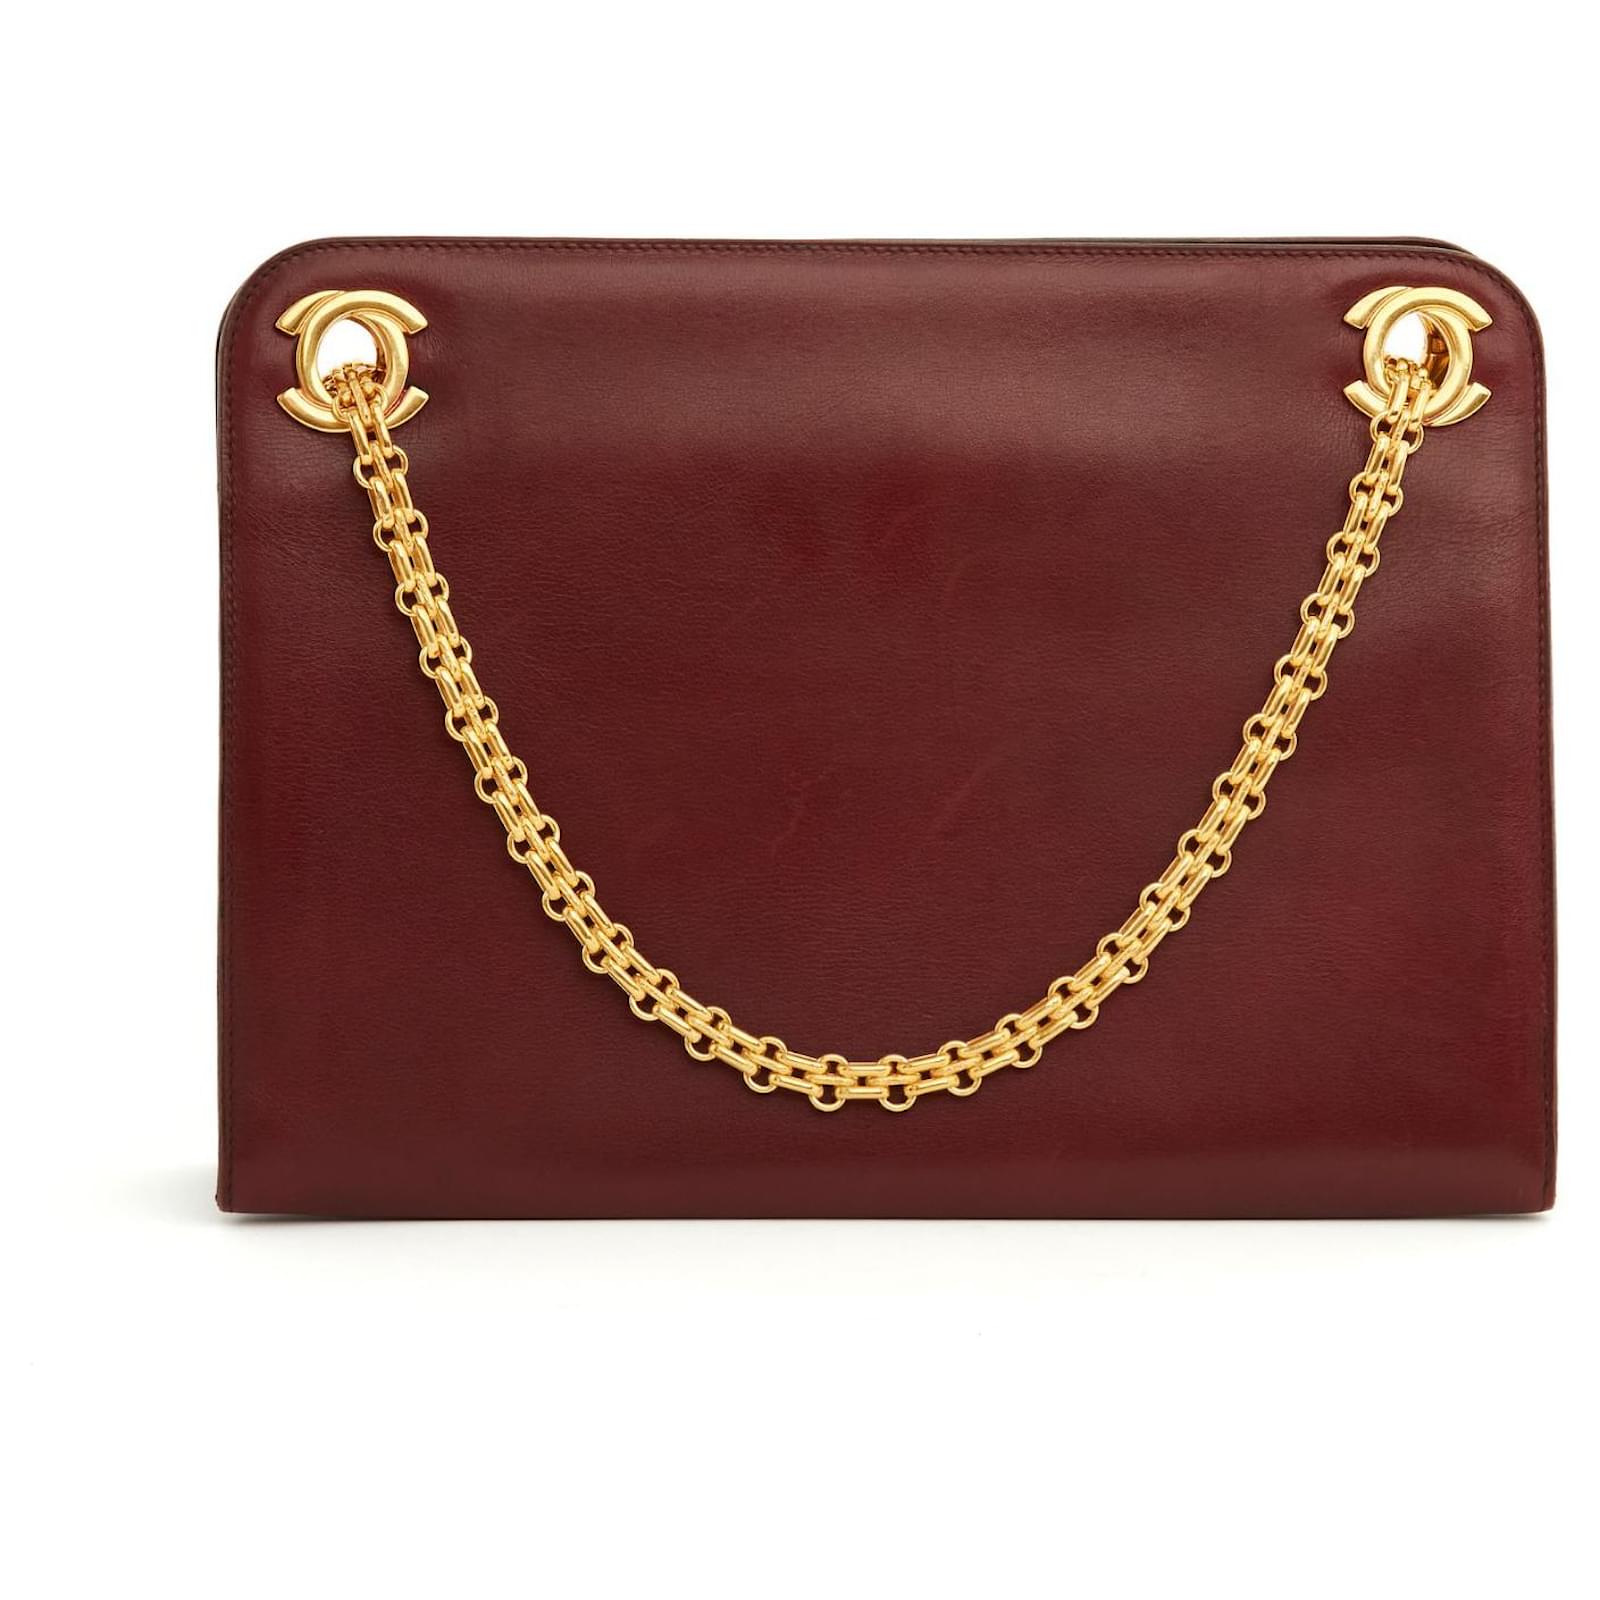 Handbags Chanel Timeless 1980s Burgundy Leather CC Bag